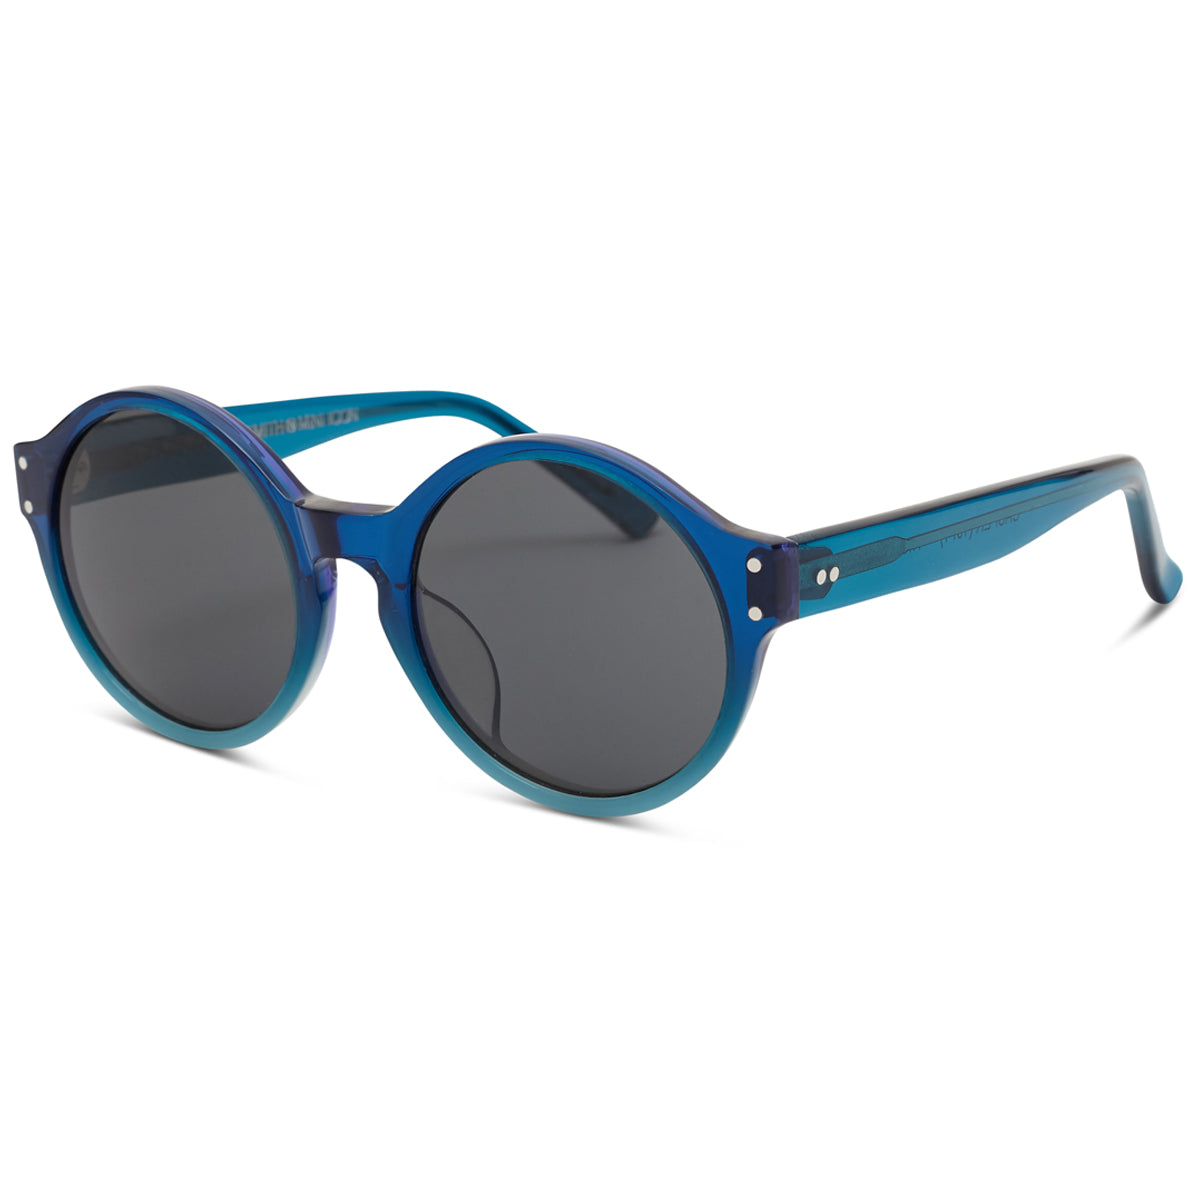 Casper Kids Sunglasses with The Pool acetate frame